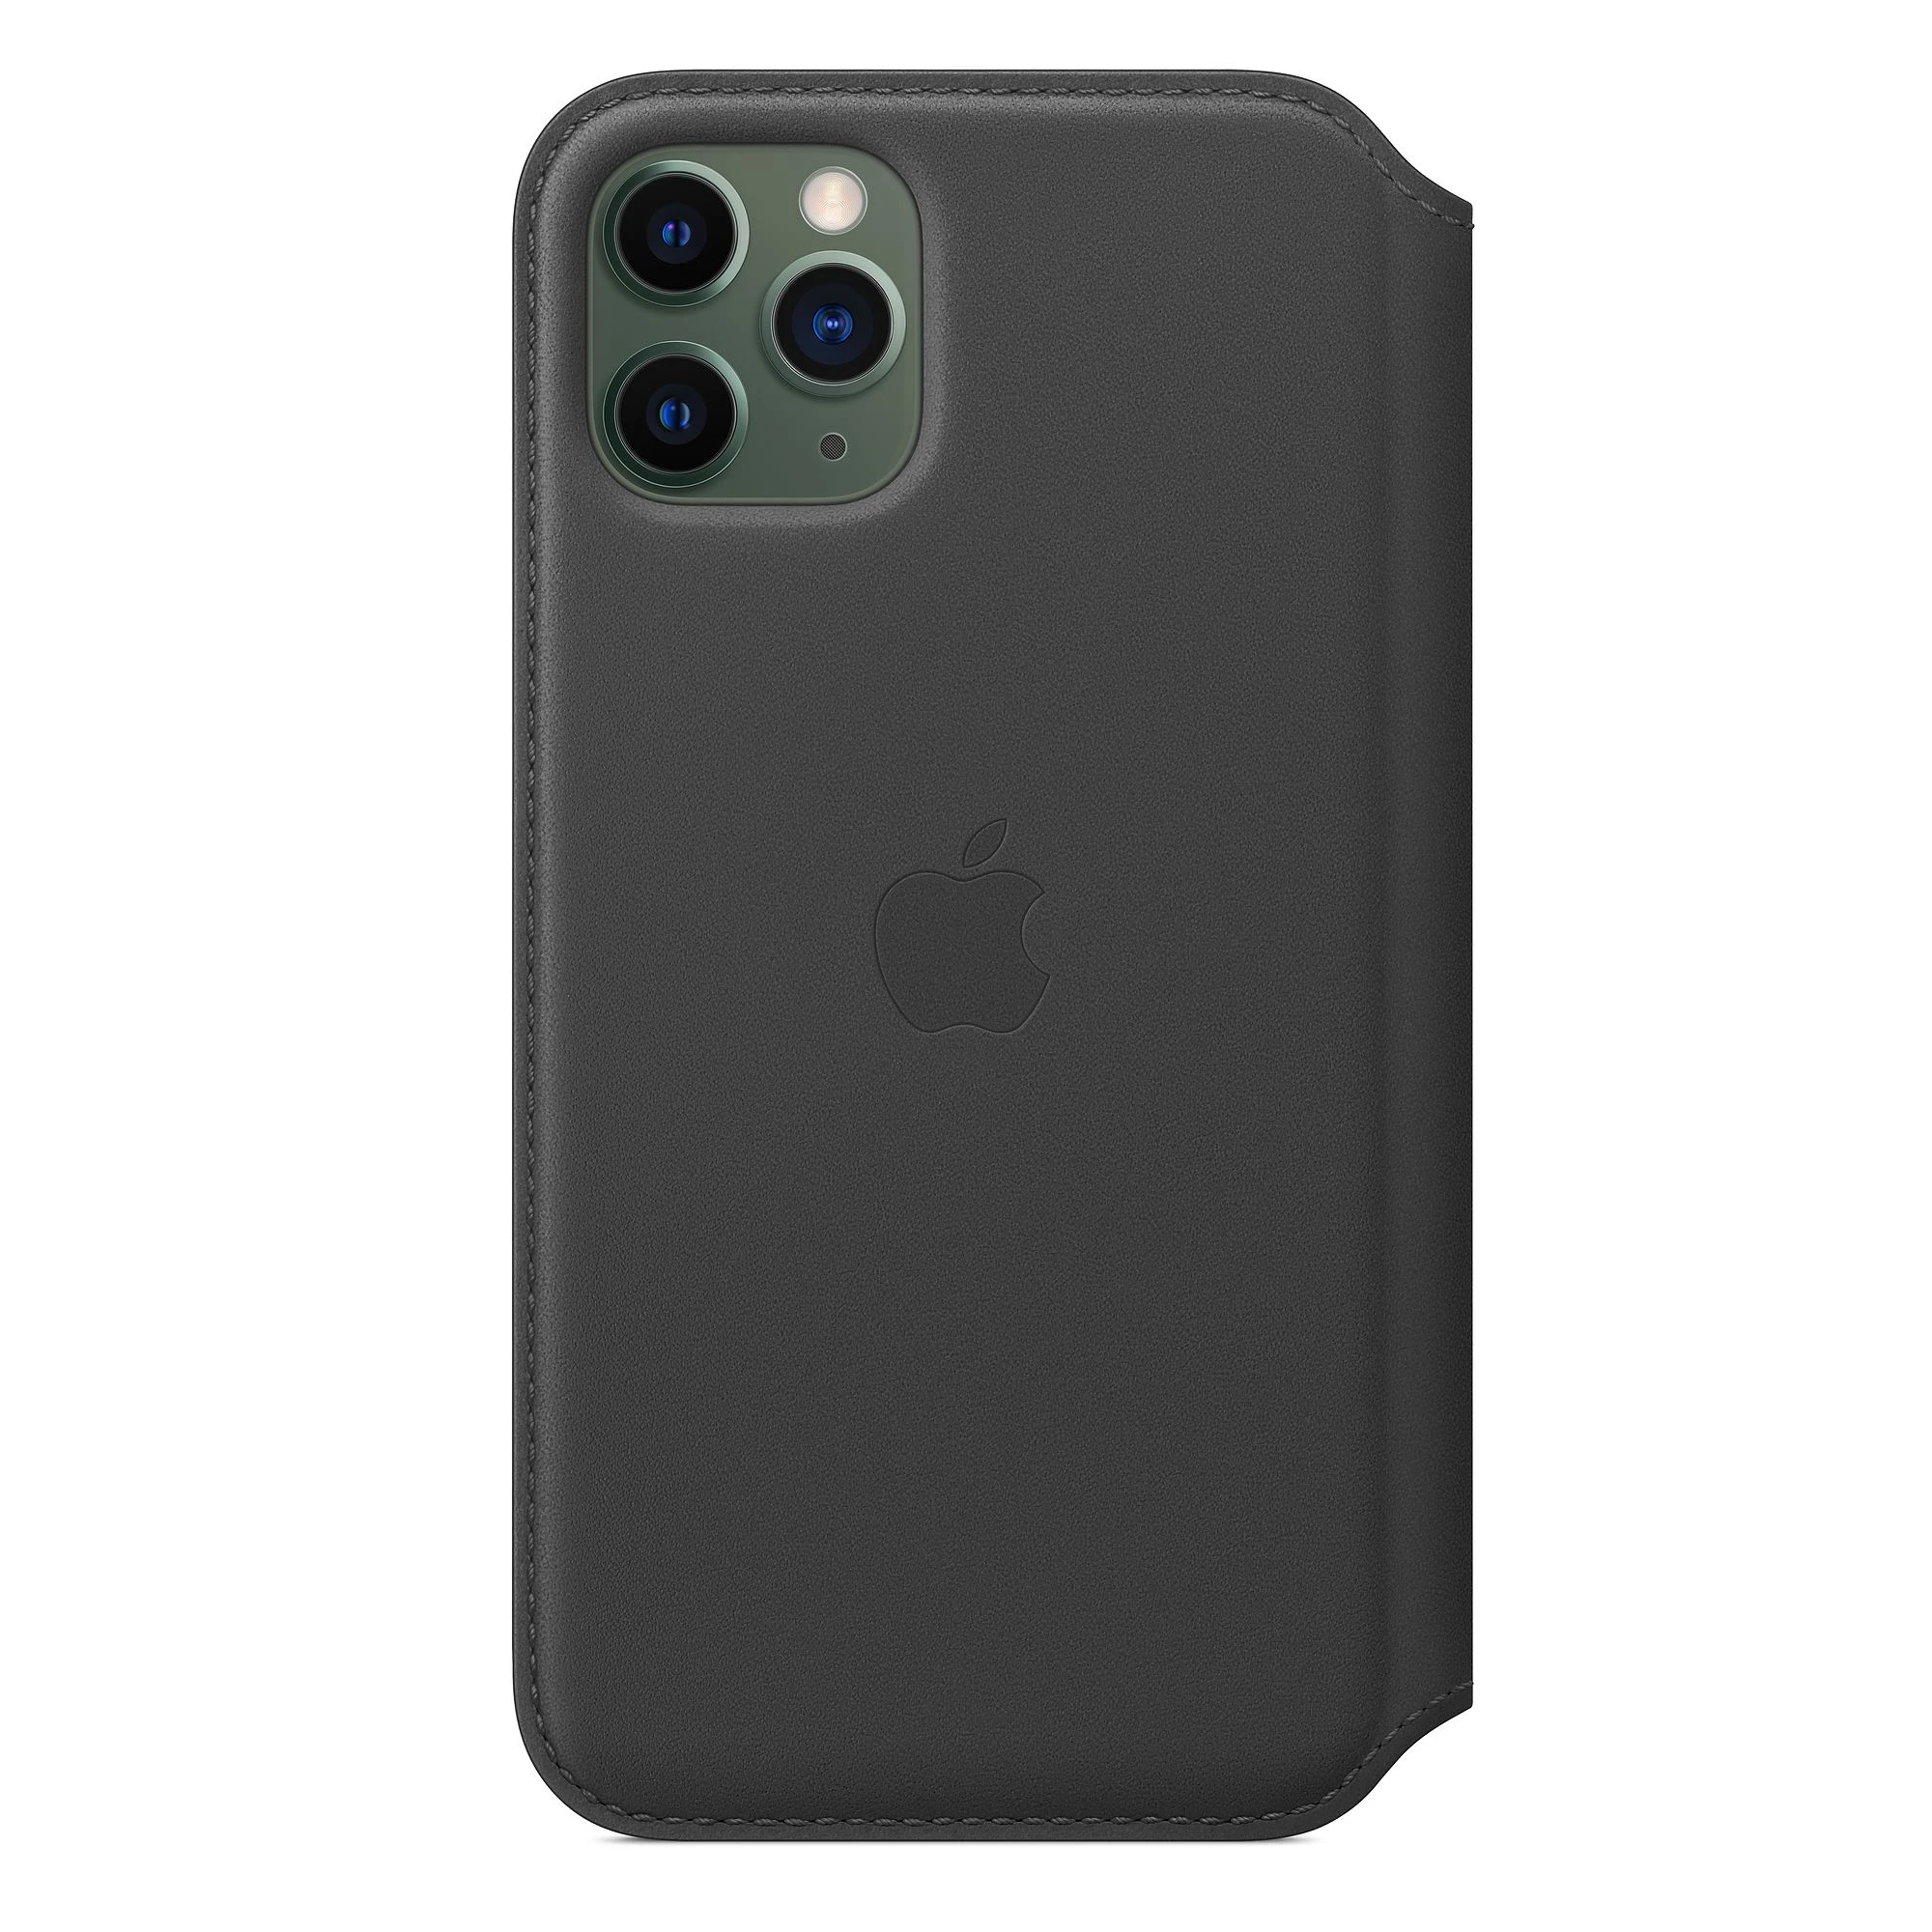 Apple iPhone 11 Pro Max Leather Folio - Black (MX082)